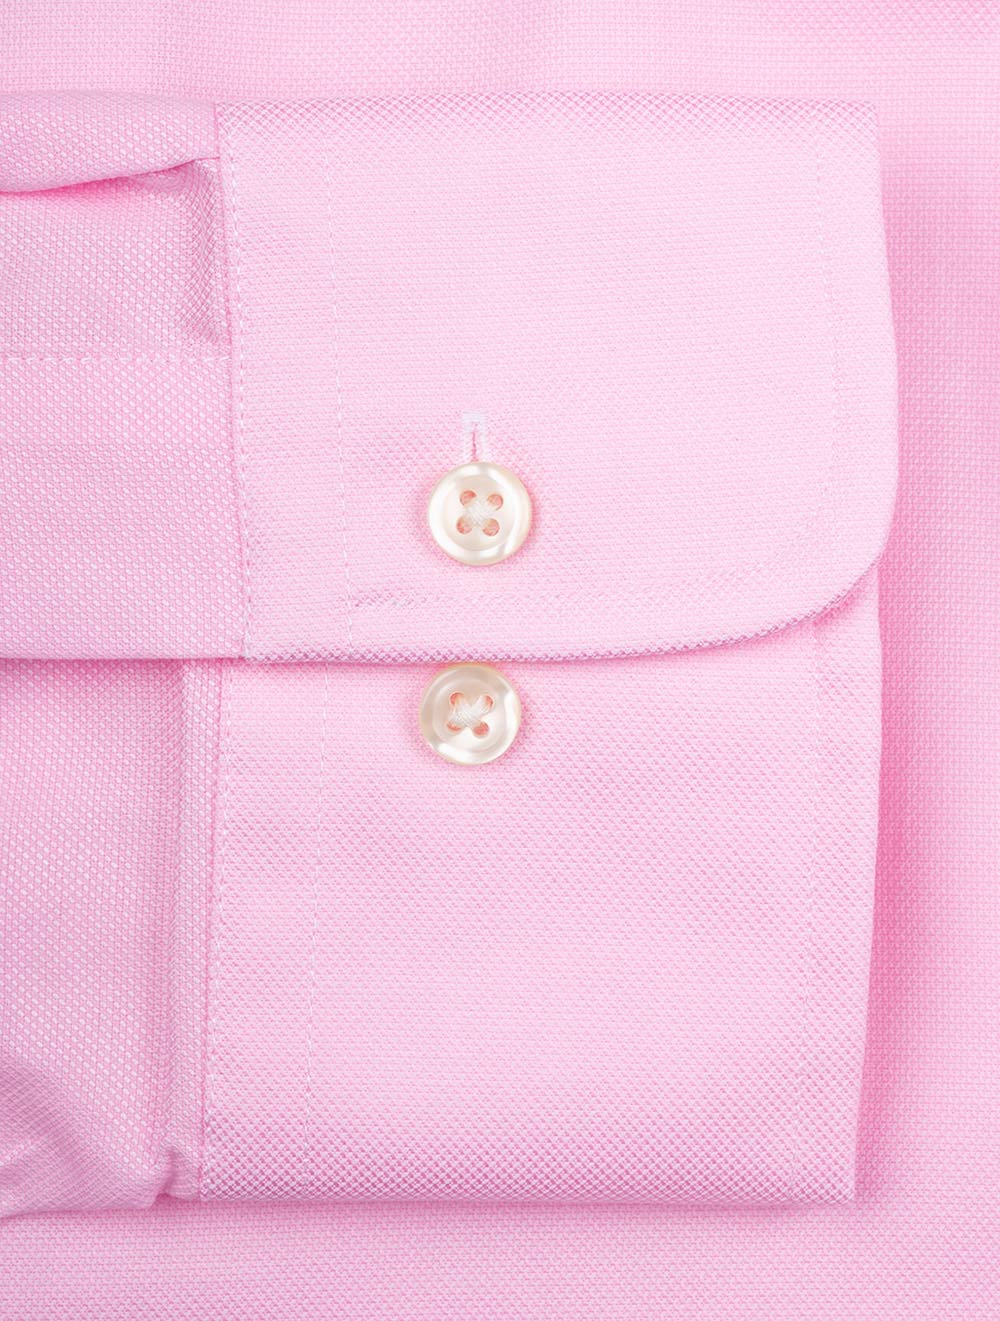 Textured Slim Shirt Pink